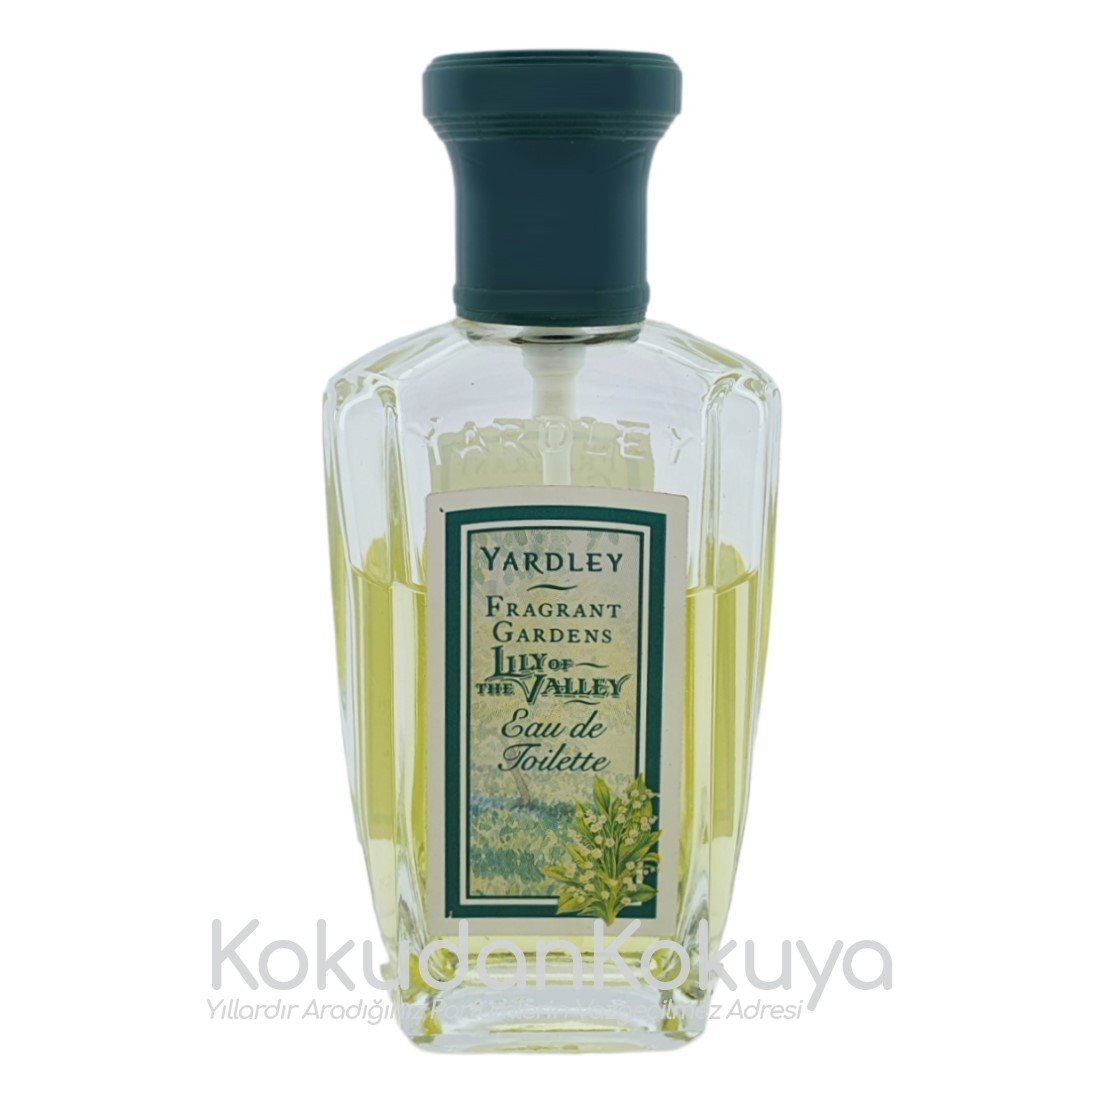 YARDLEY Lily of the Valley (Vintage) Parfüm Kadın 50ml Eau De Toilette (EDT) Sprey 